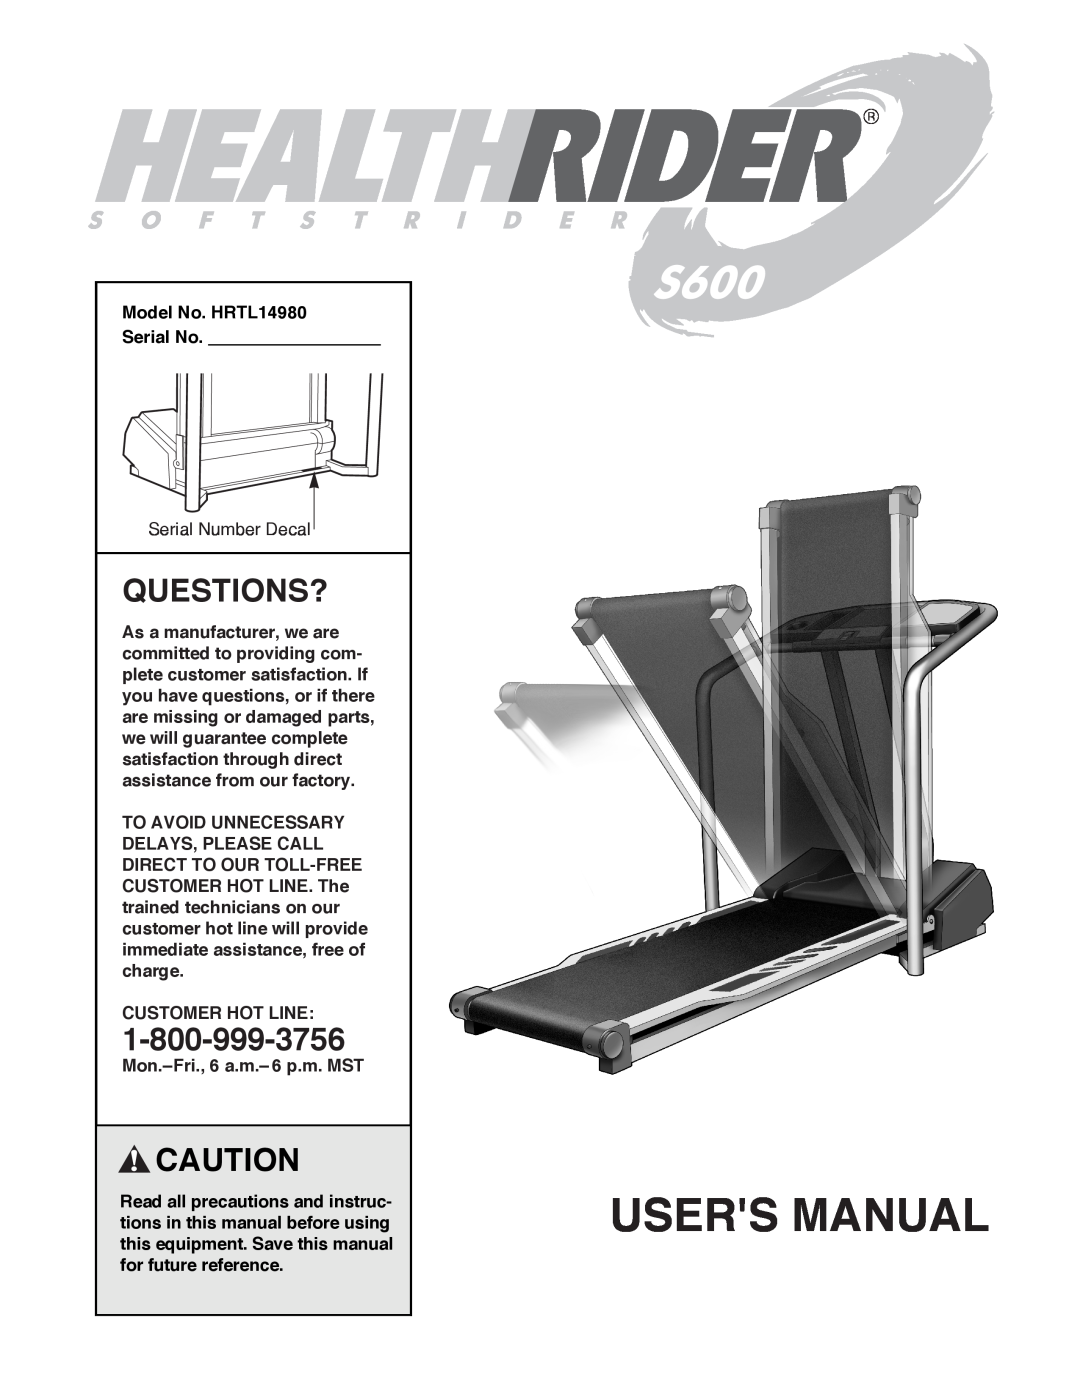 Healthrider HRTL14980 manual Questions?, Users Manual 